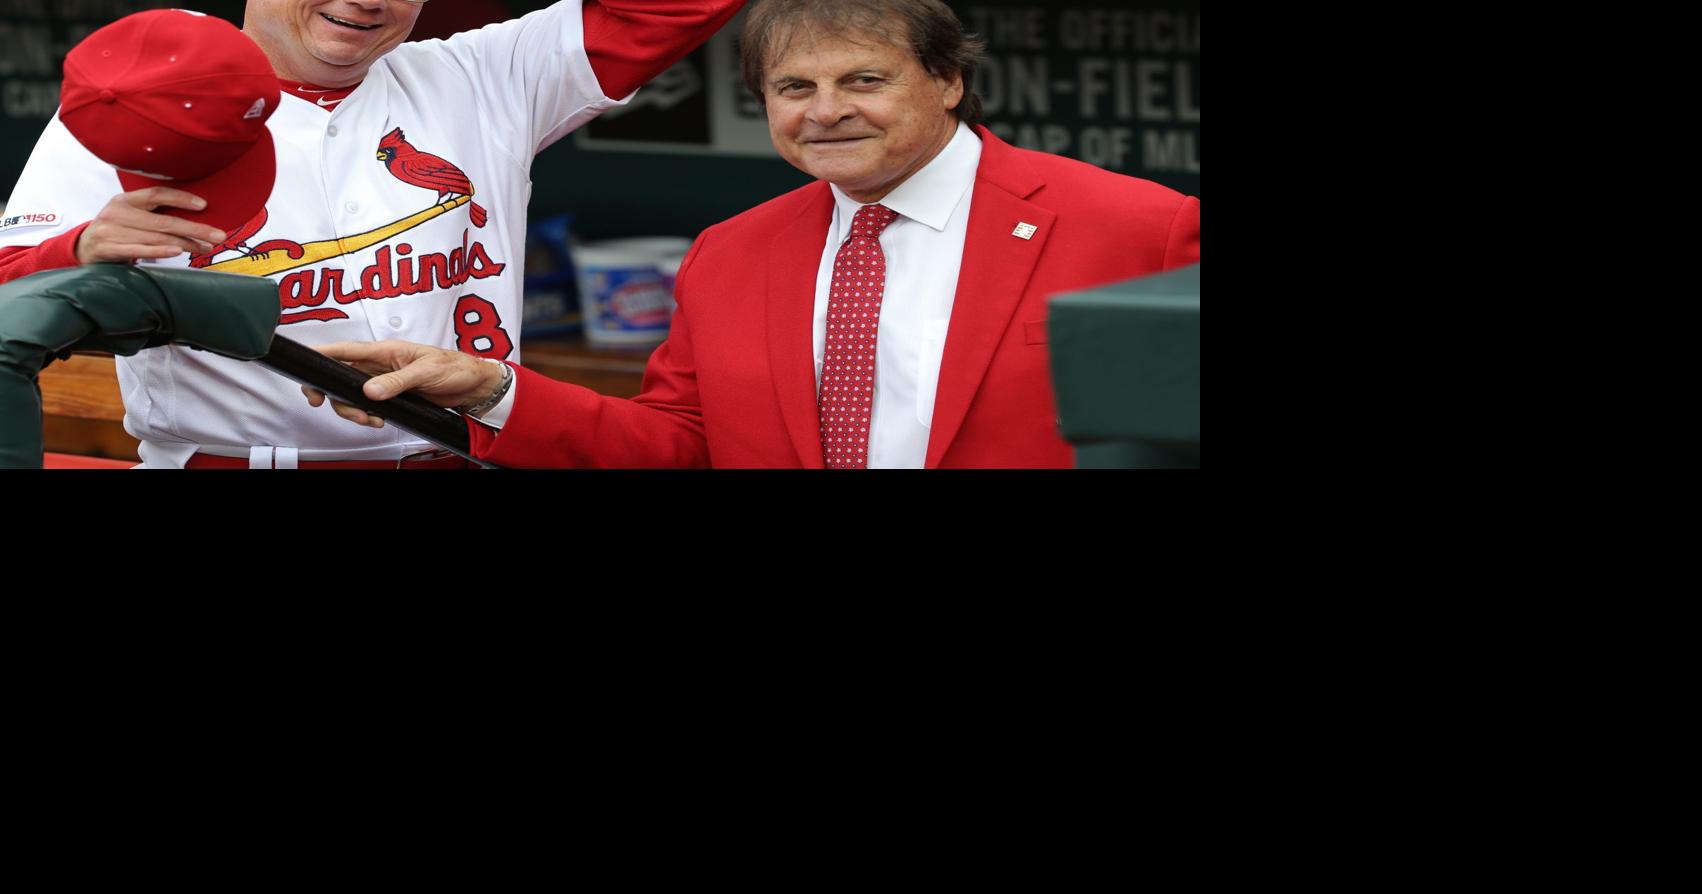 Cancer battle behind him, former Cardinals manager Tony La Russa